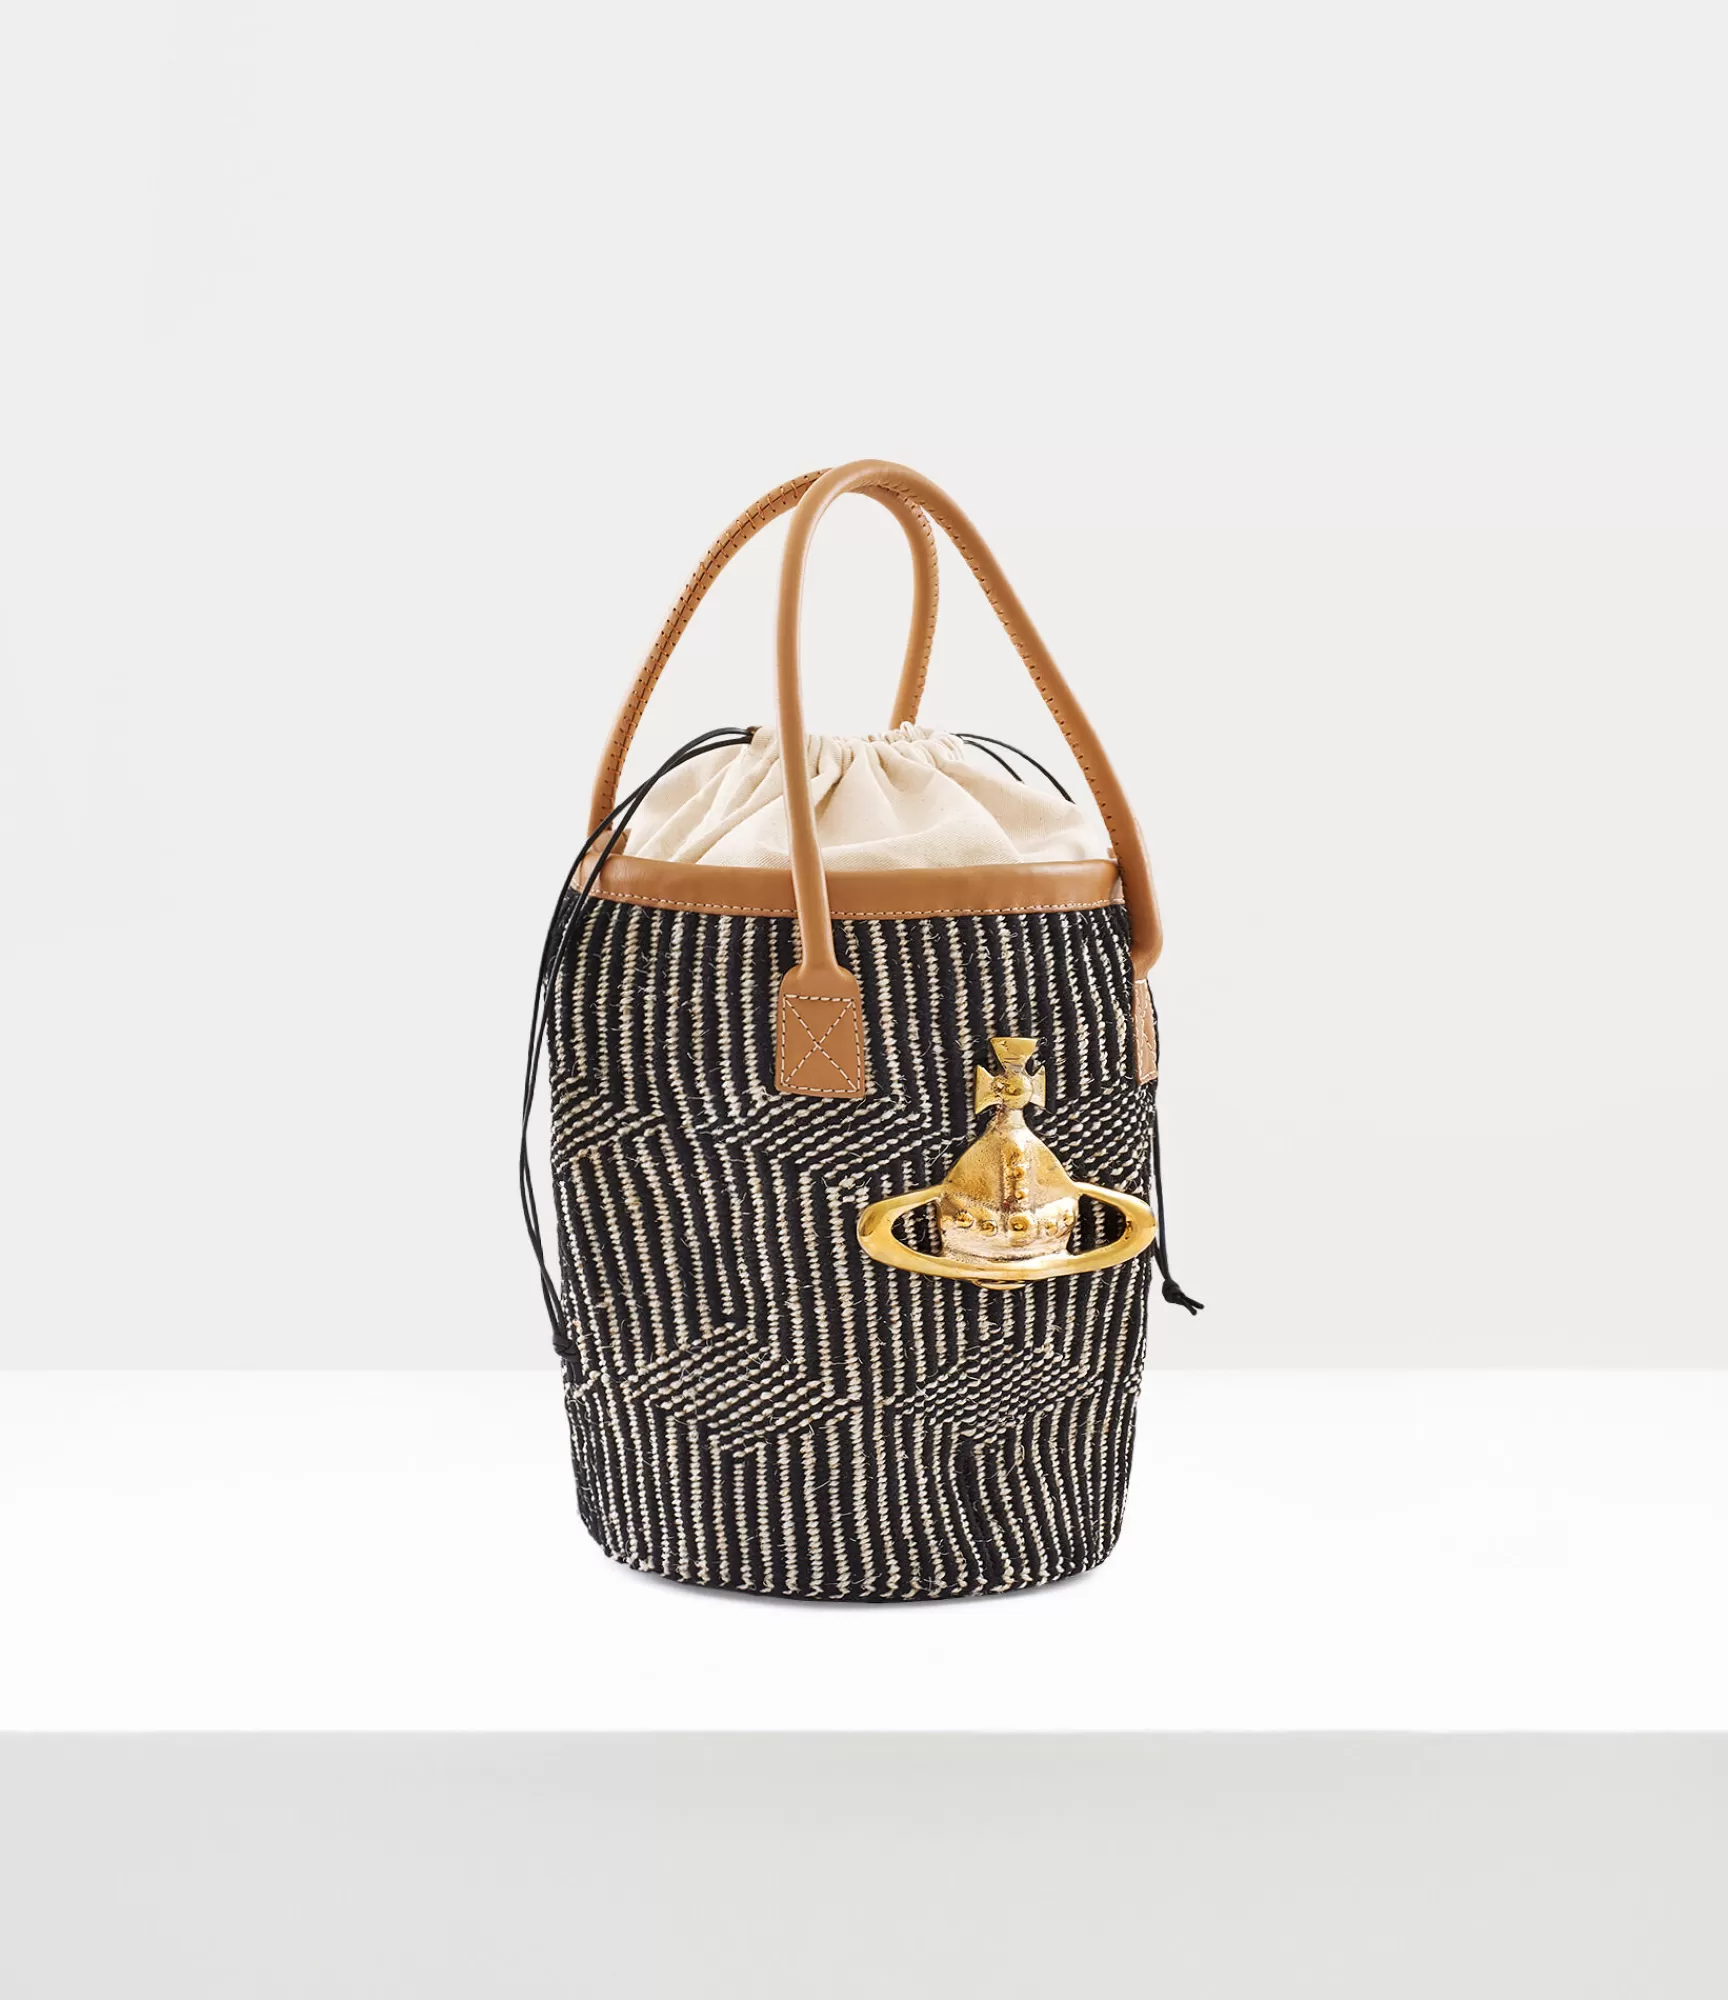 Vivienne Westwood Handbags*Jane basket bag Black/white